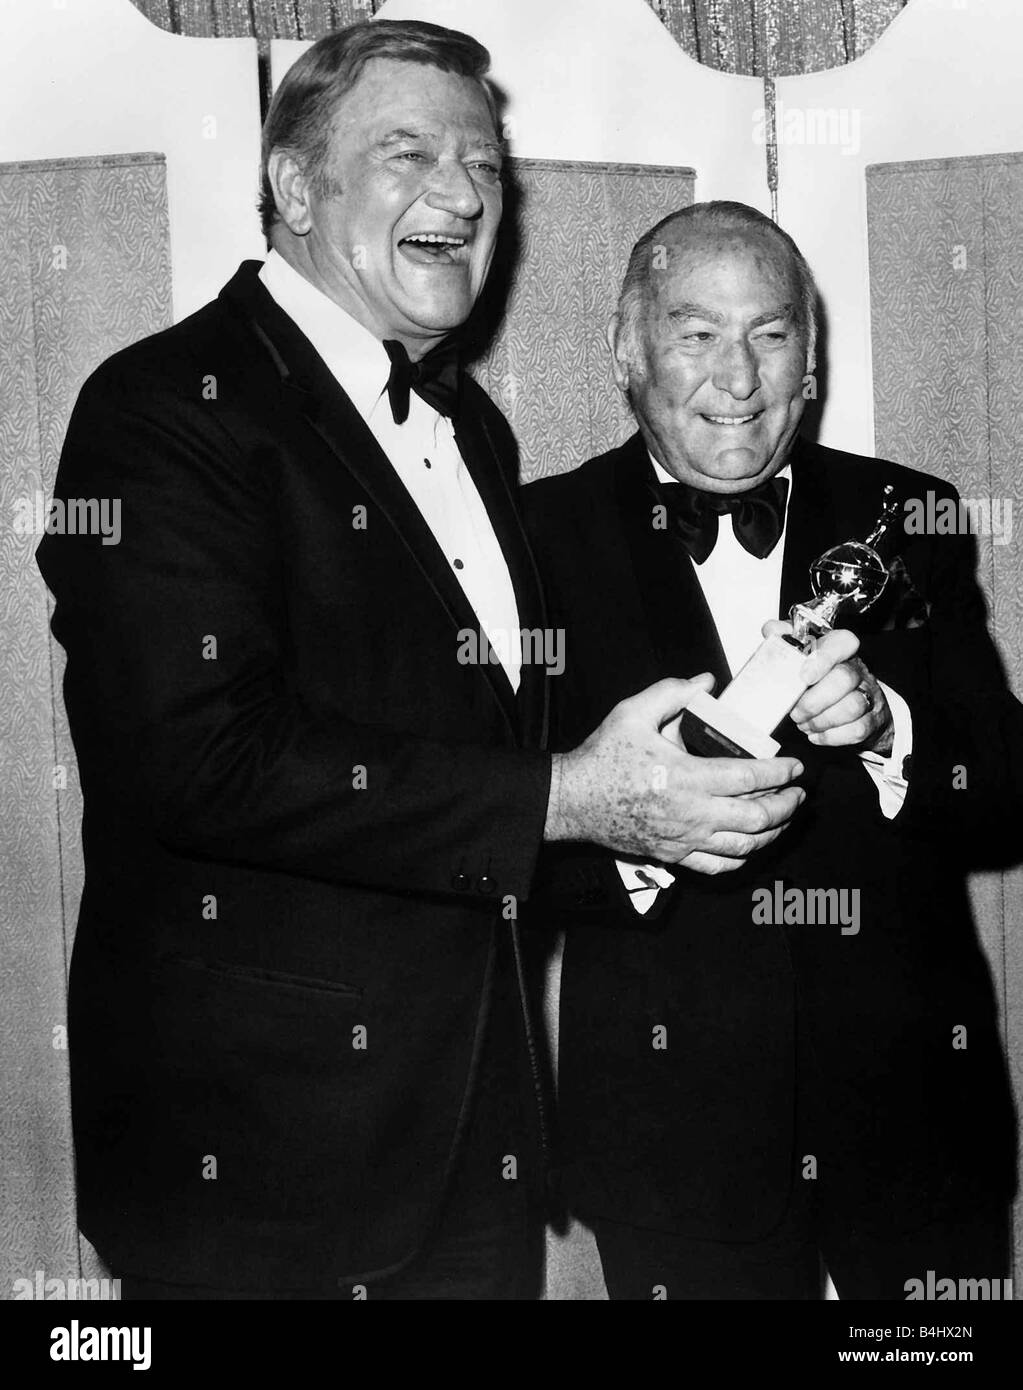 Hal Wallis film producer accepts Cecil B De Mille award 1975 from actor John Wayne Stock Photo